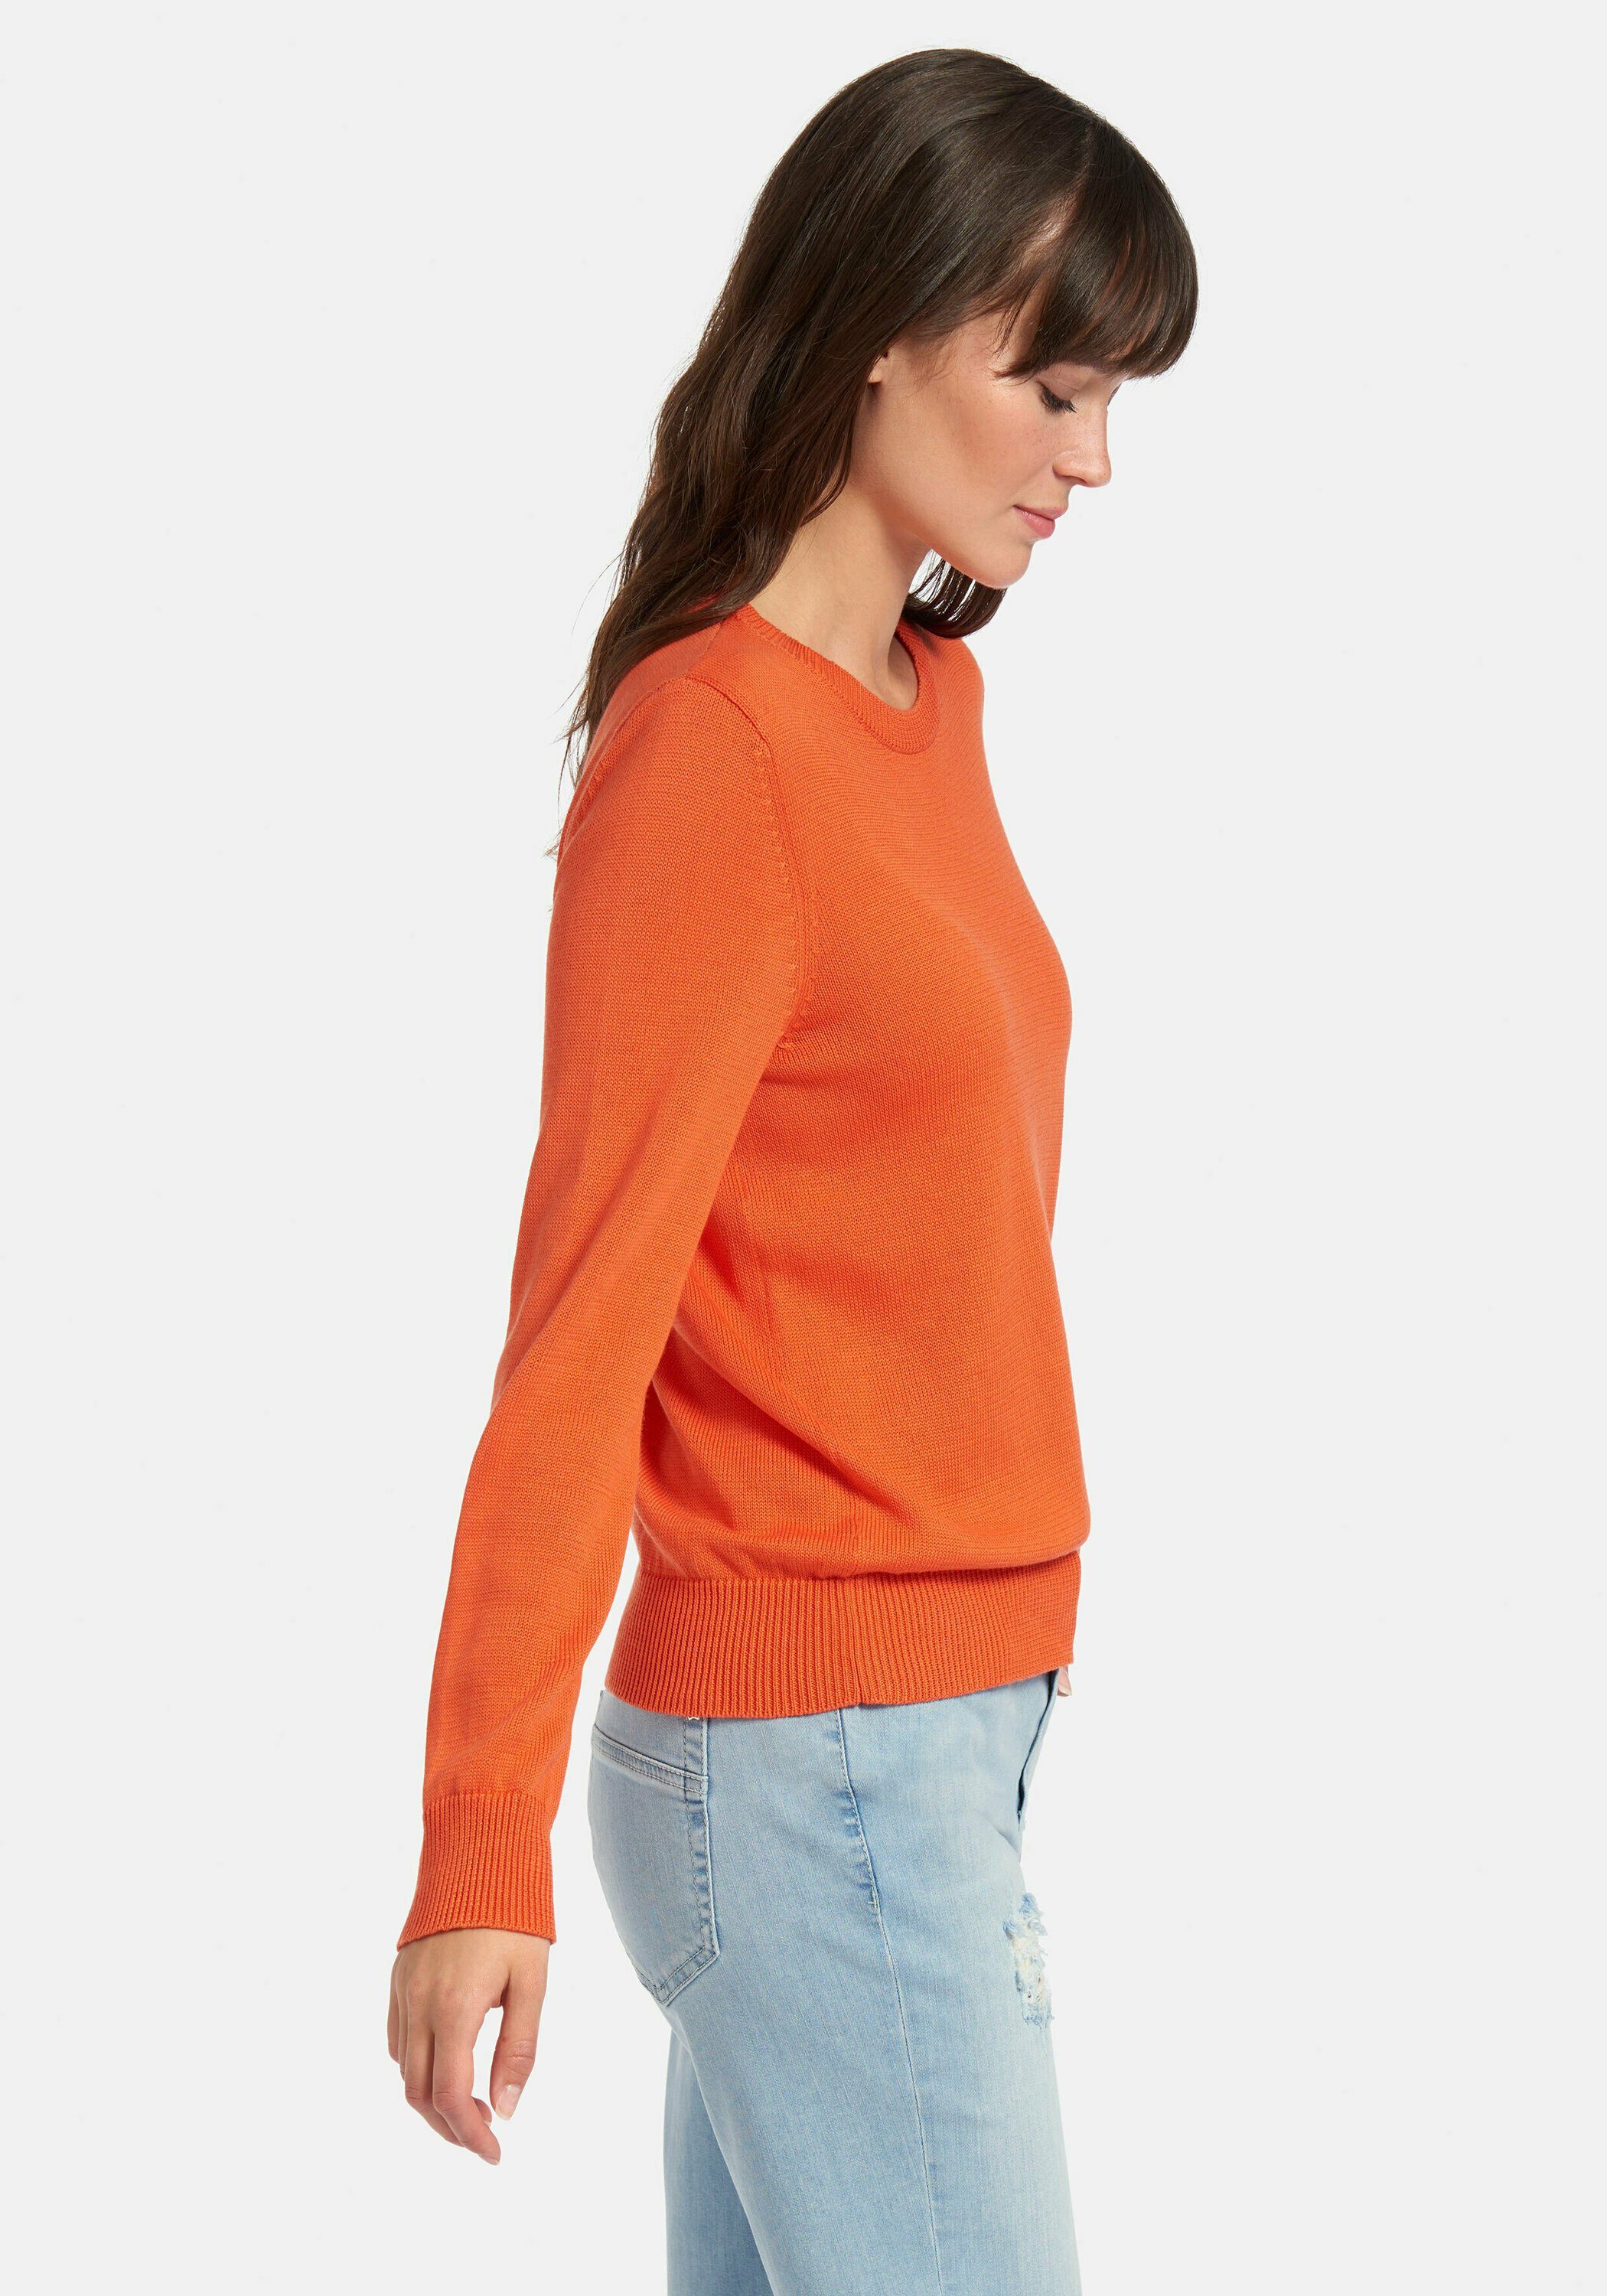 Naht Sweatshirt cotton orange Hahn Dekorative Peter